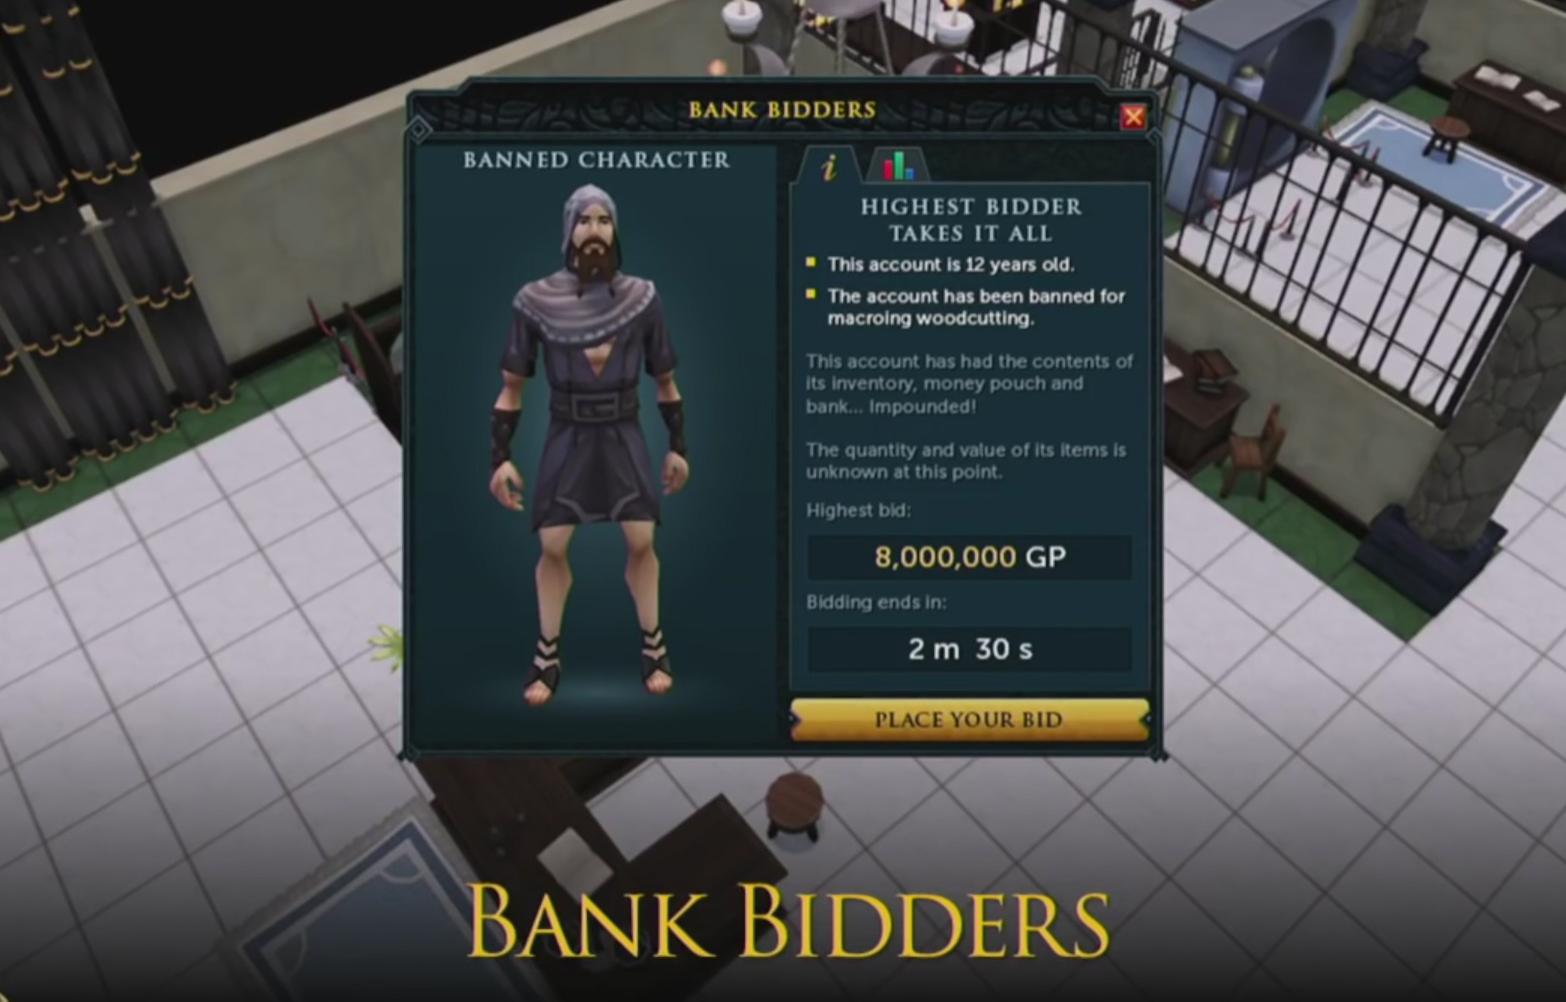 「RuneFest」で公開された「Bank bidders」のイメージ画像